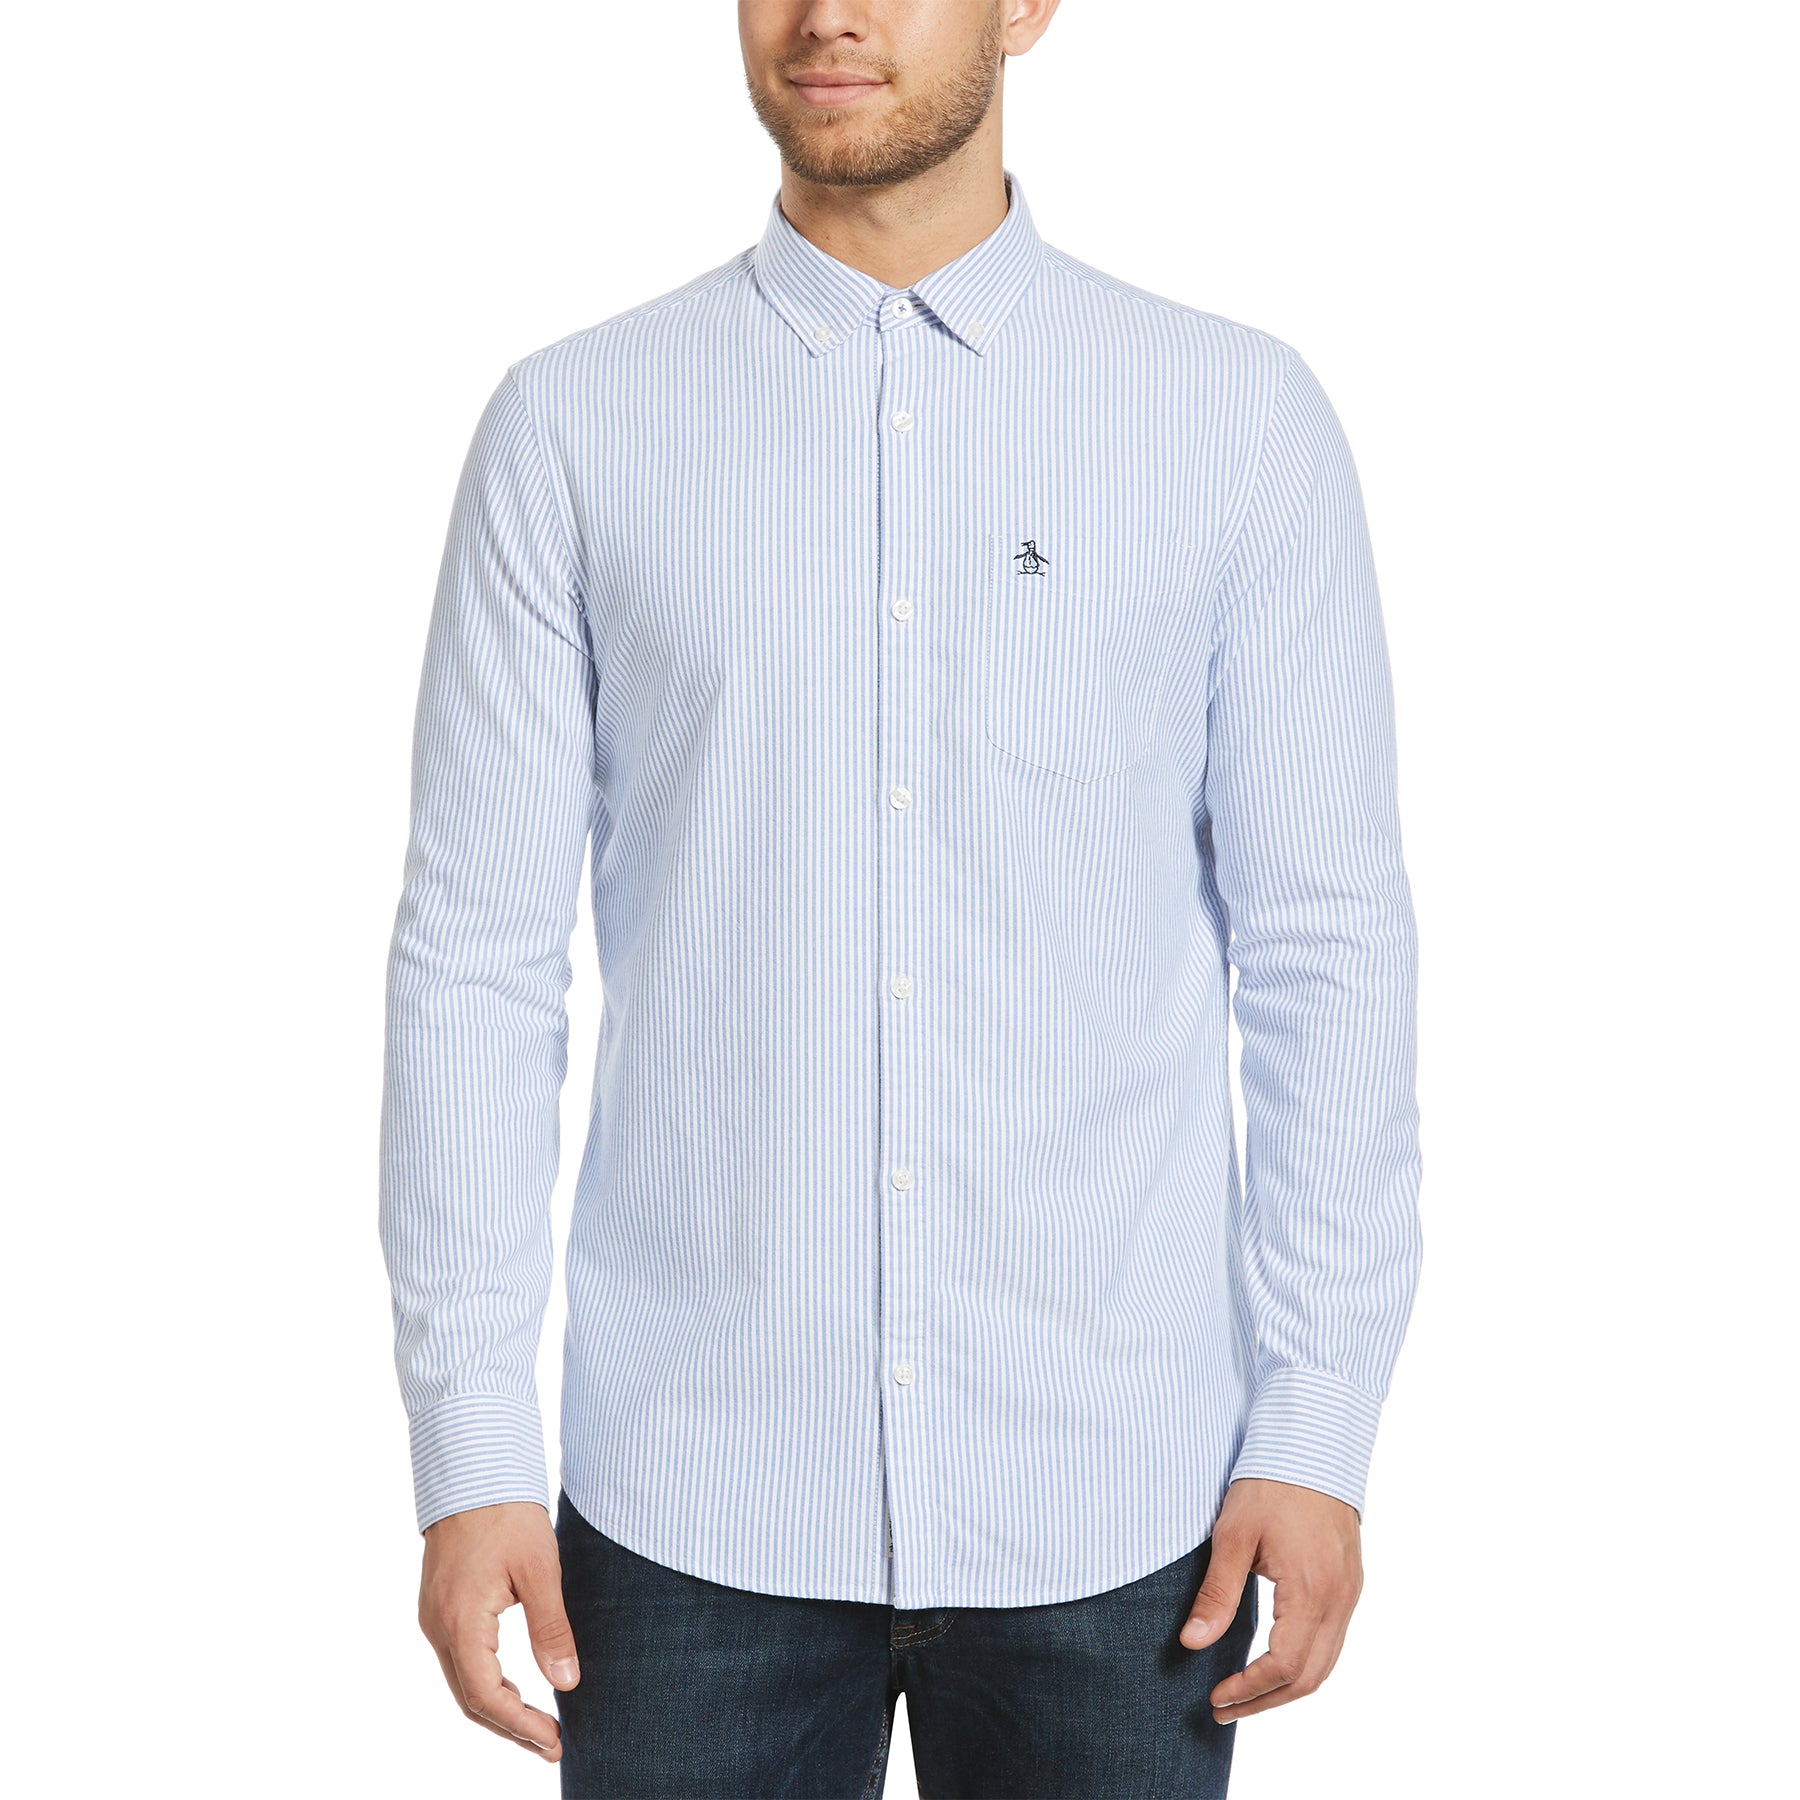 View Oxford Stripe Slim Fit Shirt In Amparo Blue information